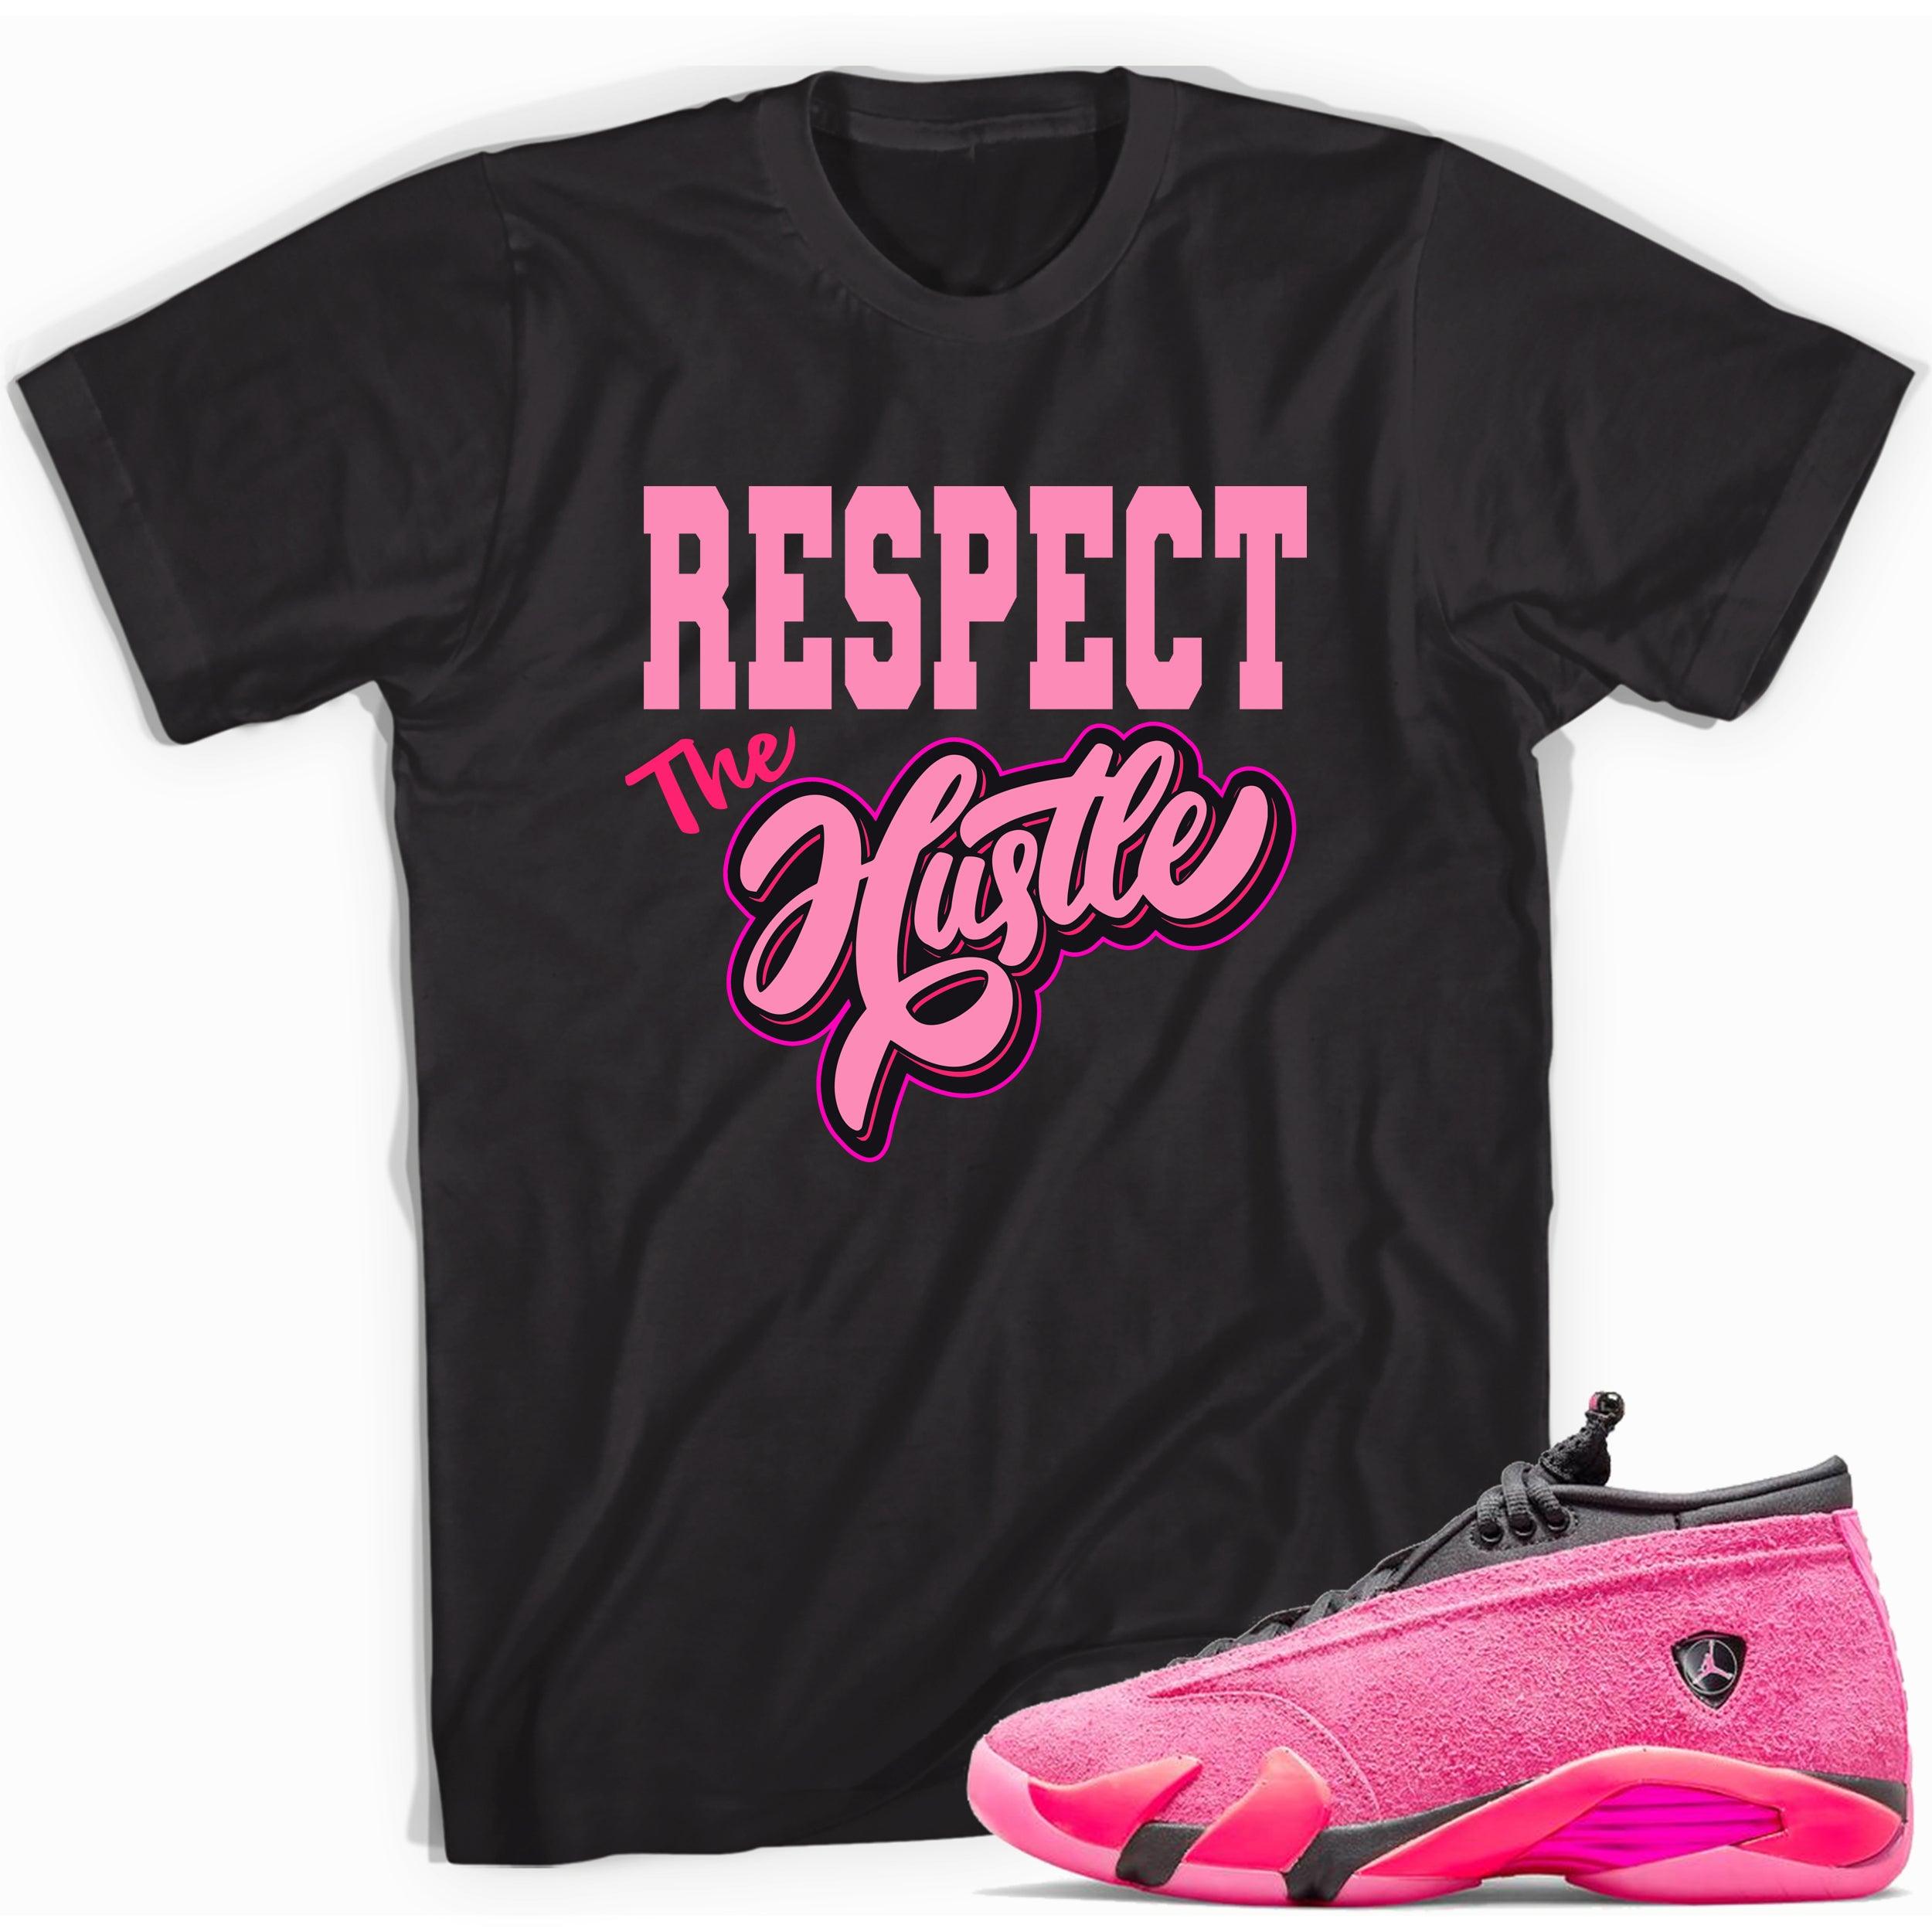 Black Respect The Hustle Shirt AJ 14s Low Shocking Pink photo